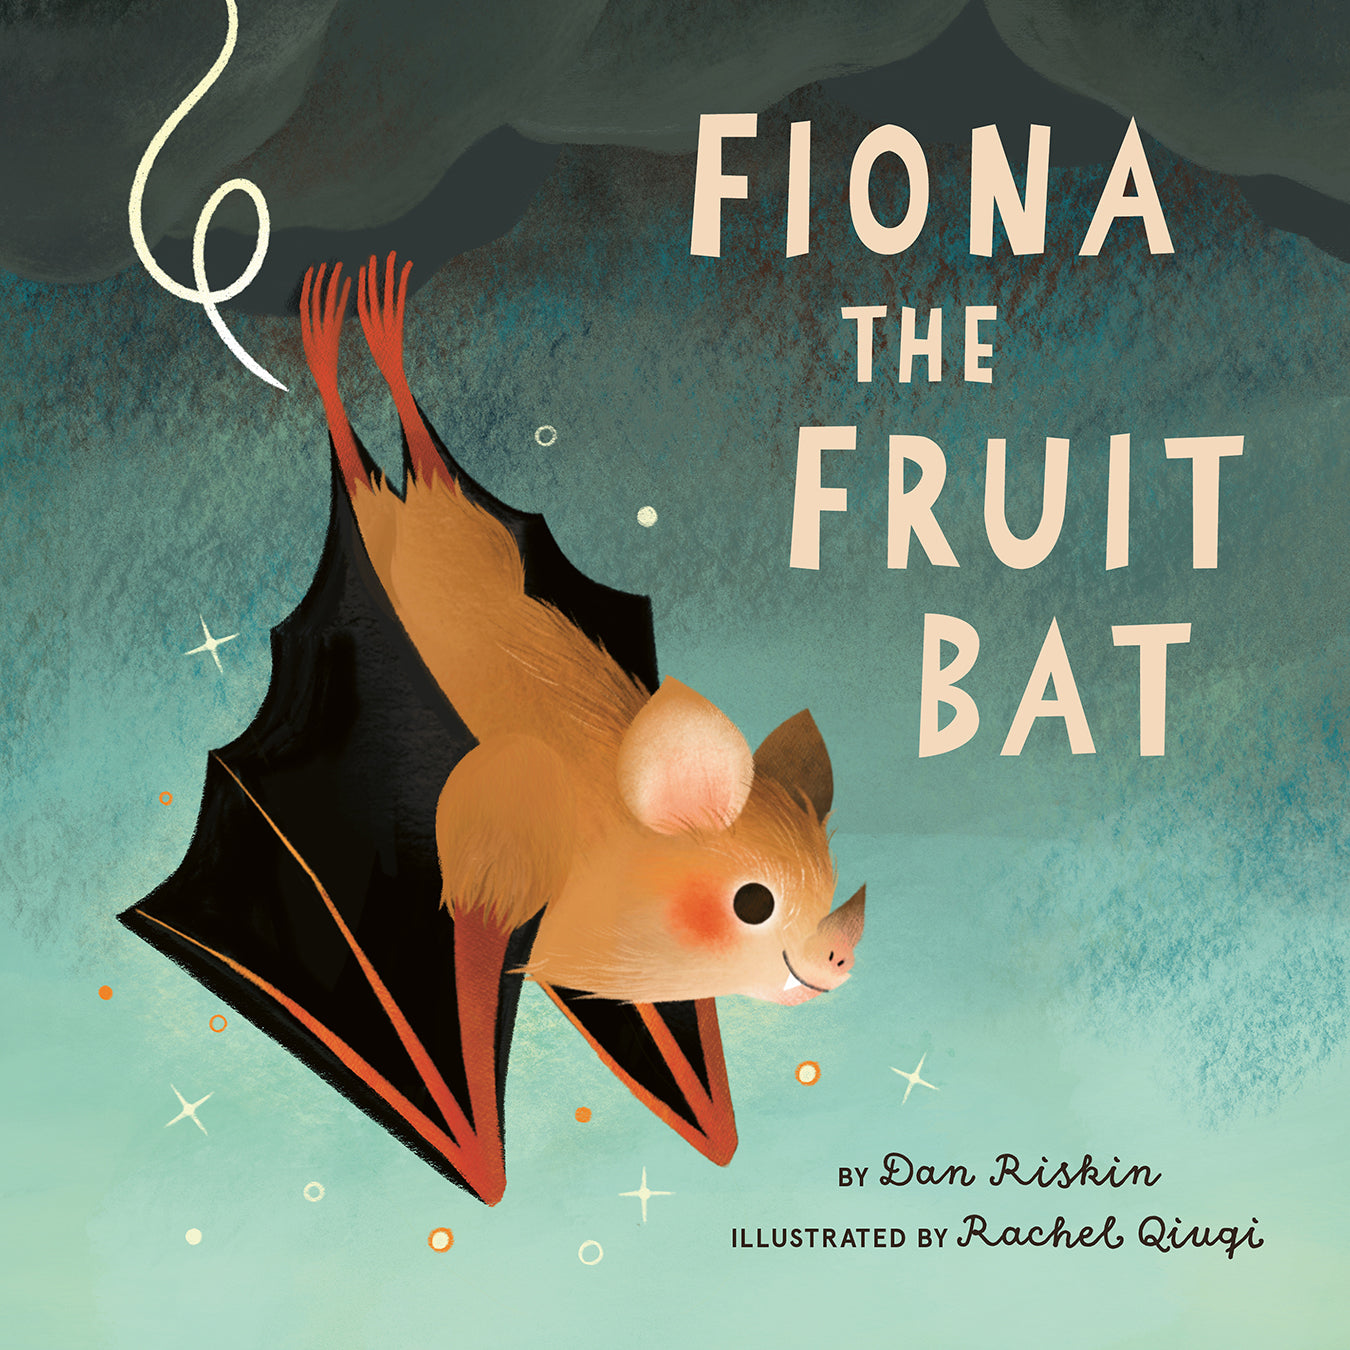 Fiona the Fruit Bat